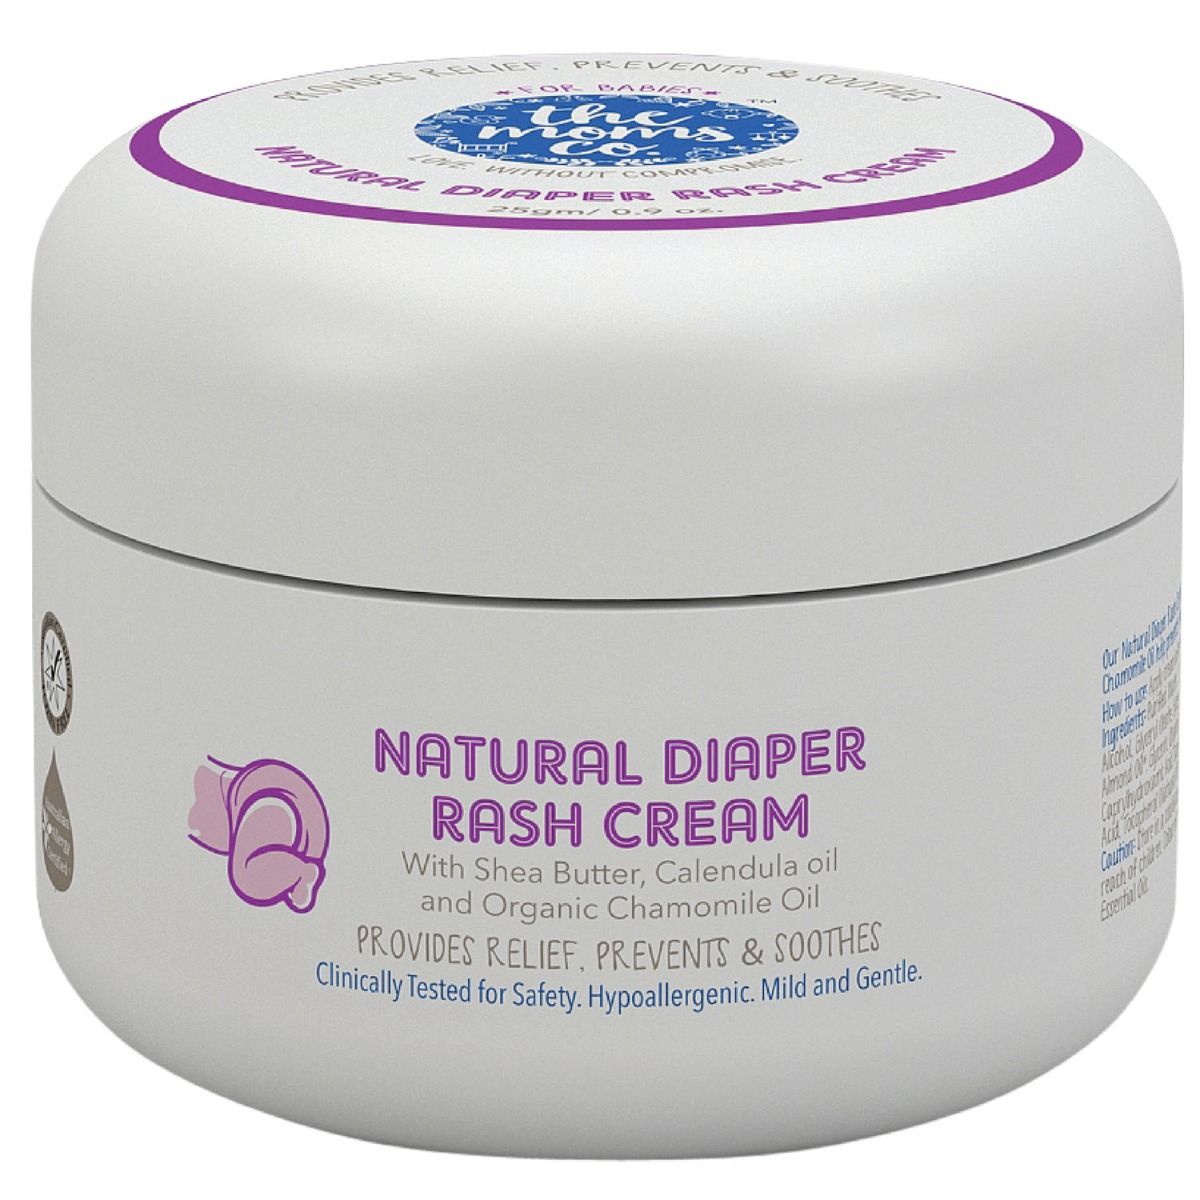 The Moms Co. Natural Diaper Rash Cream, 25 gm, Pack of 1 